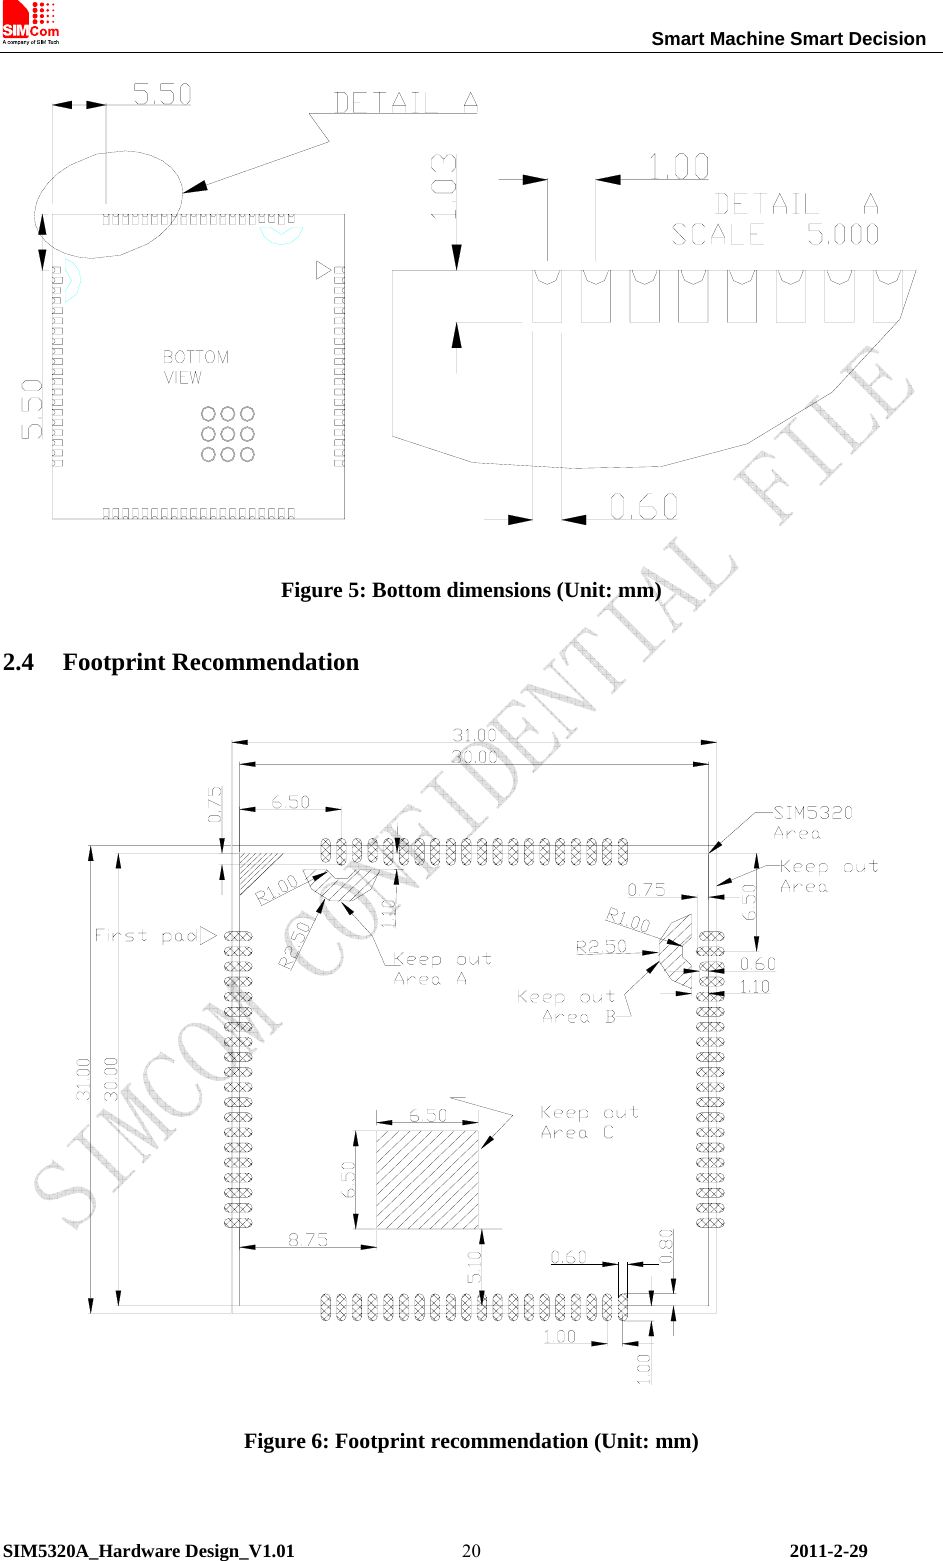                                                                Smart Machine Smart Decision SIM5320A_Hardware Design_V1.01   2011-2-29 20 Figure 5: Bottom dimensions (Unit: mm) 2.4 Footprint Recommendation    Figure 6: Footprint recommendation (Unit: mm) 